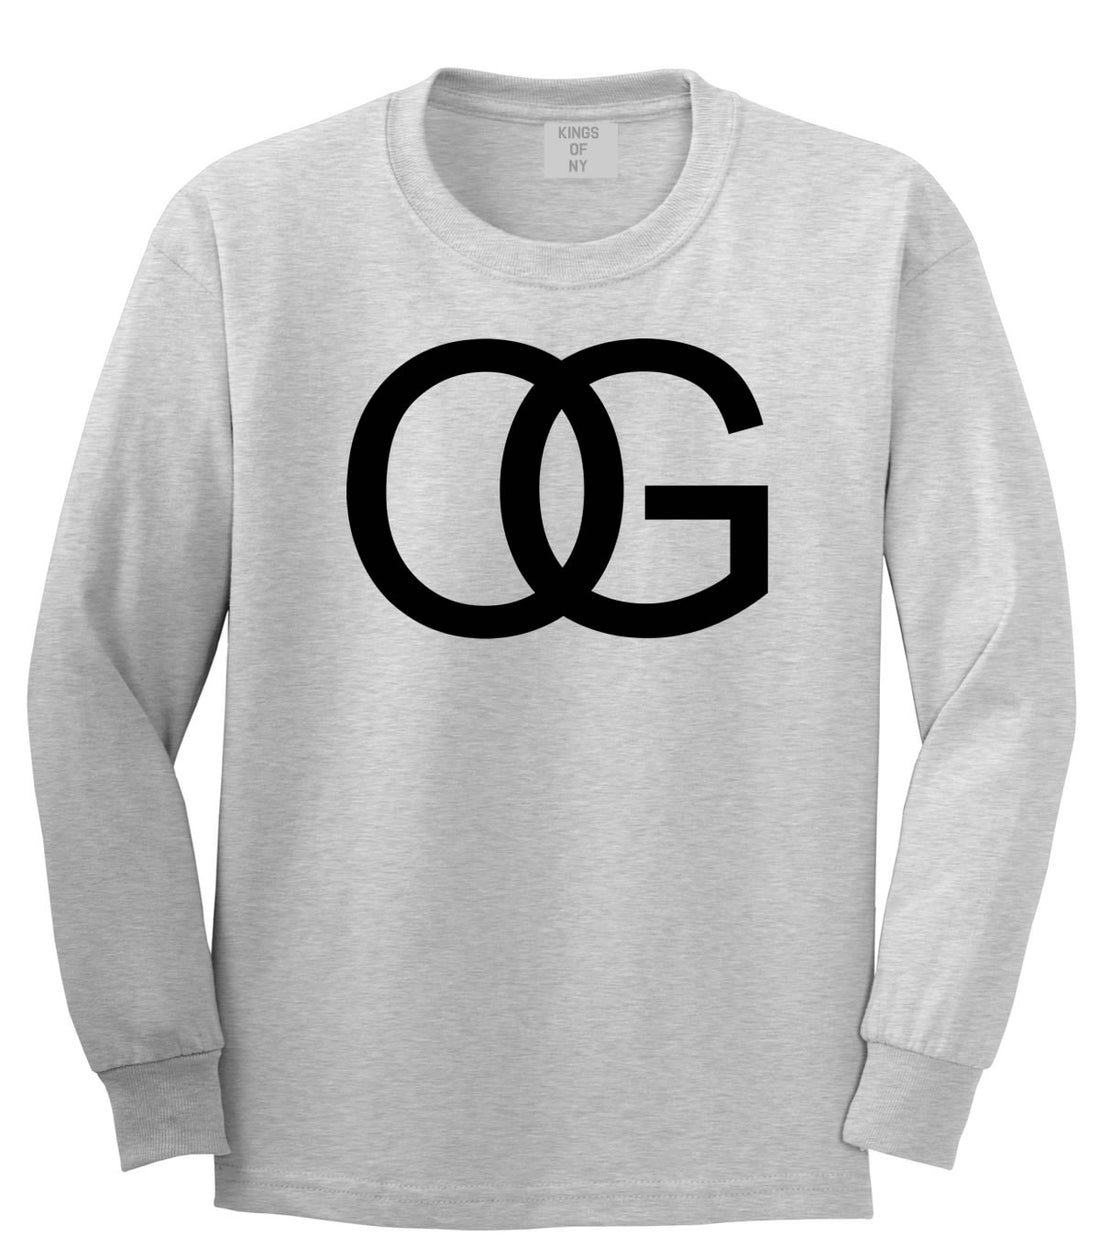 OG Original Gangsta Gangster Style Green Long Sleeve T-Shirt In Grey by Kings Of NY